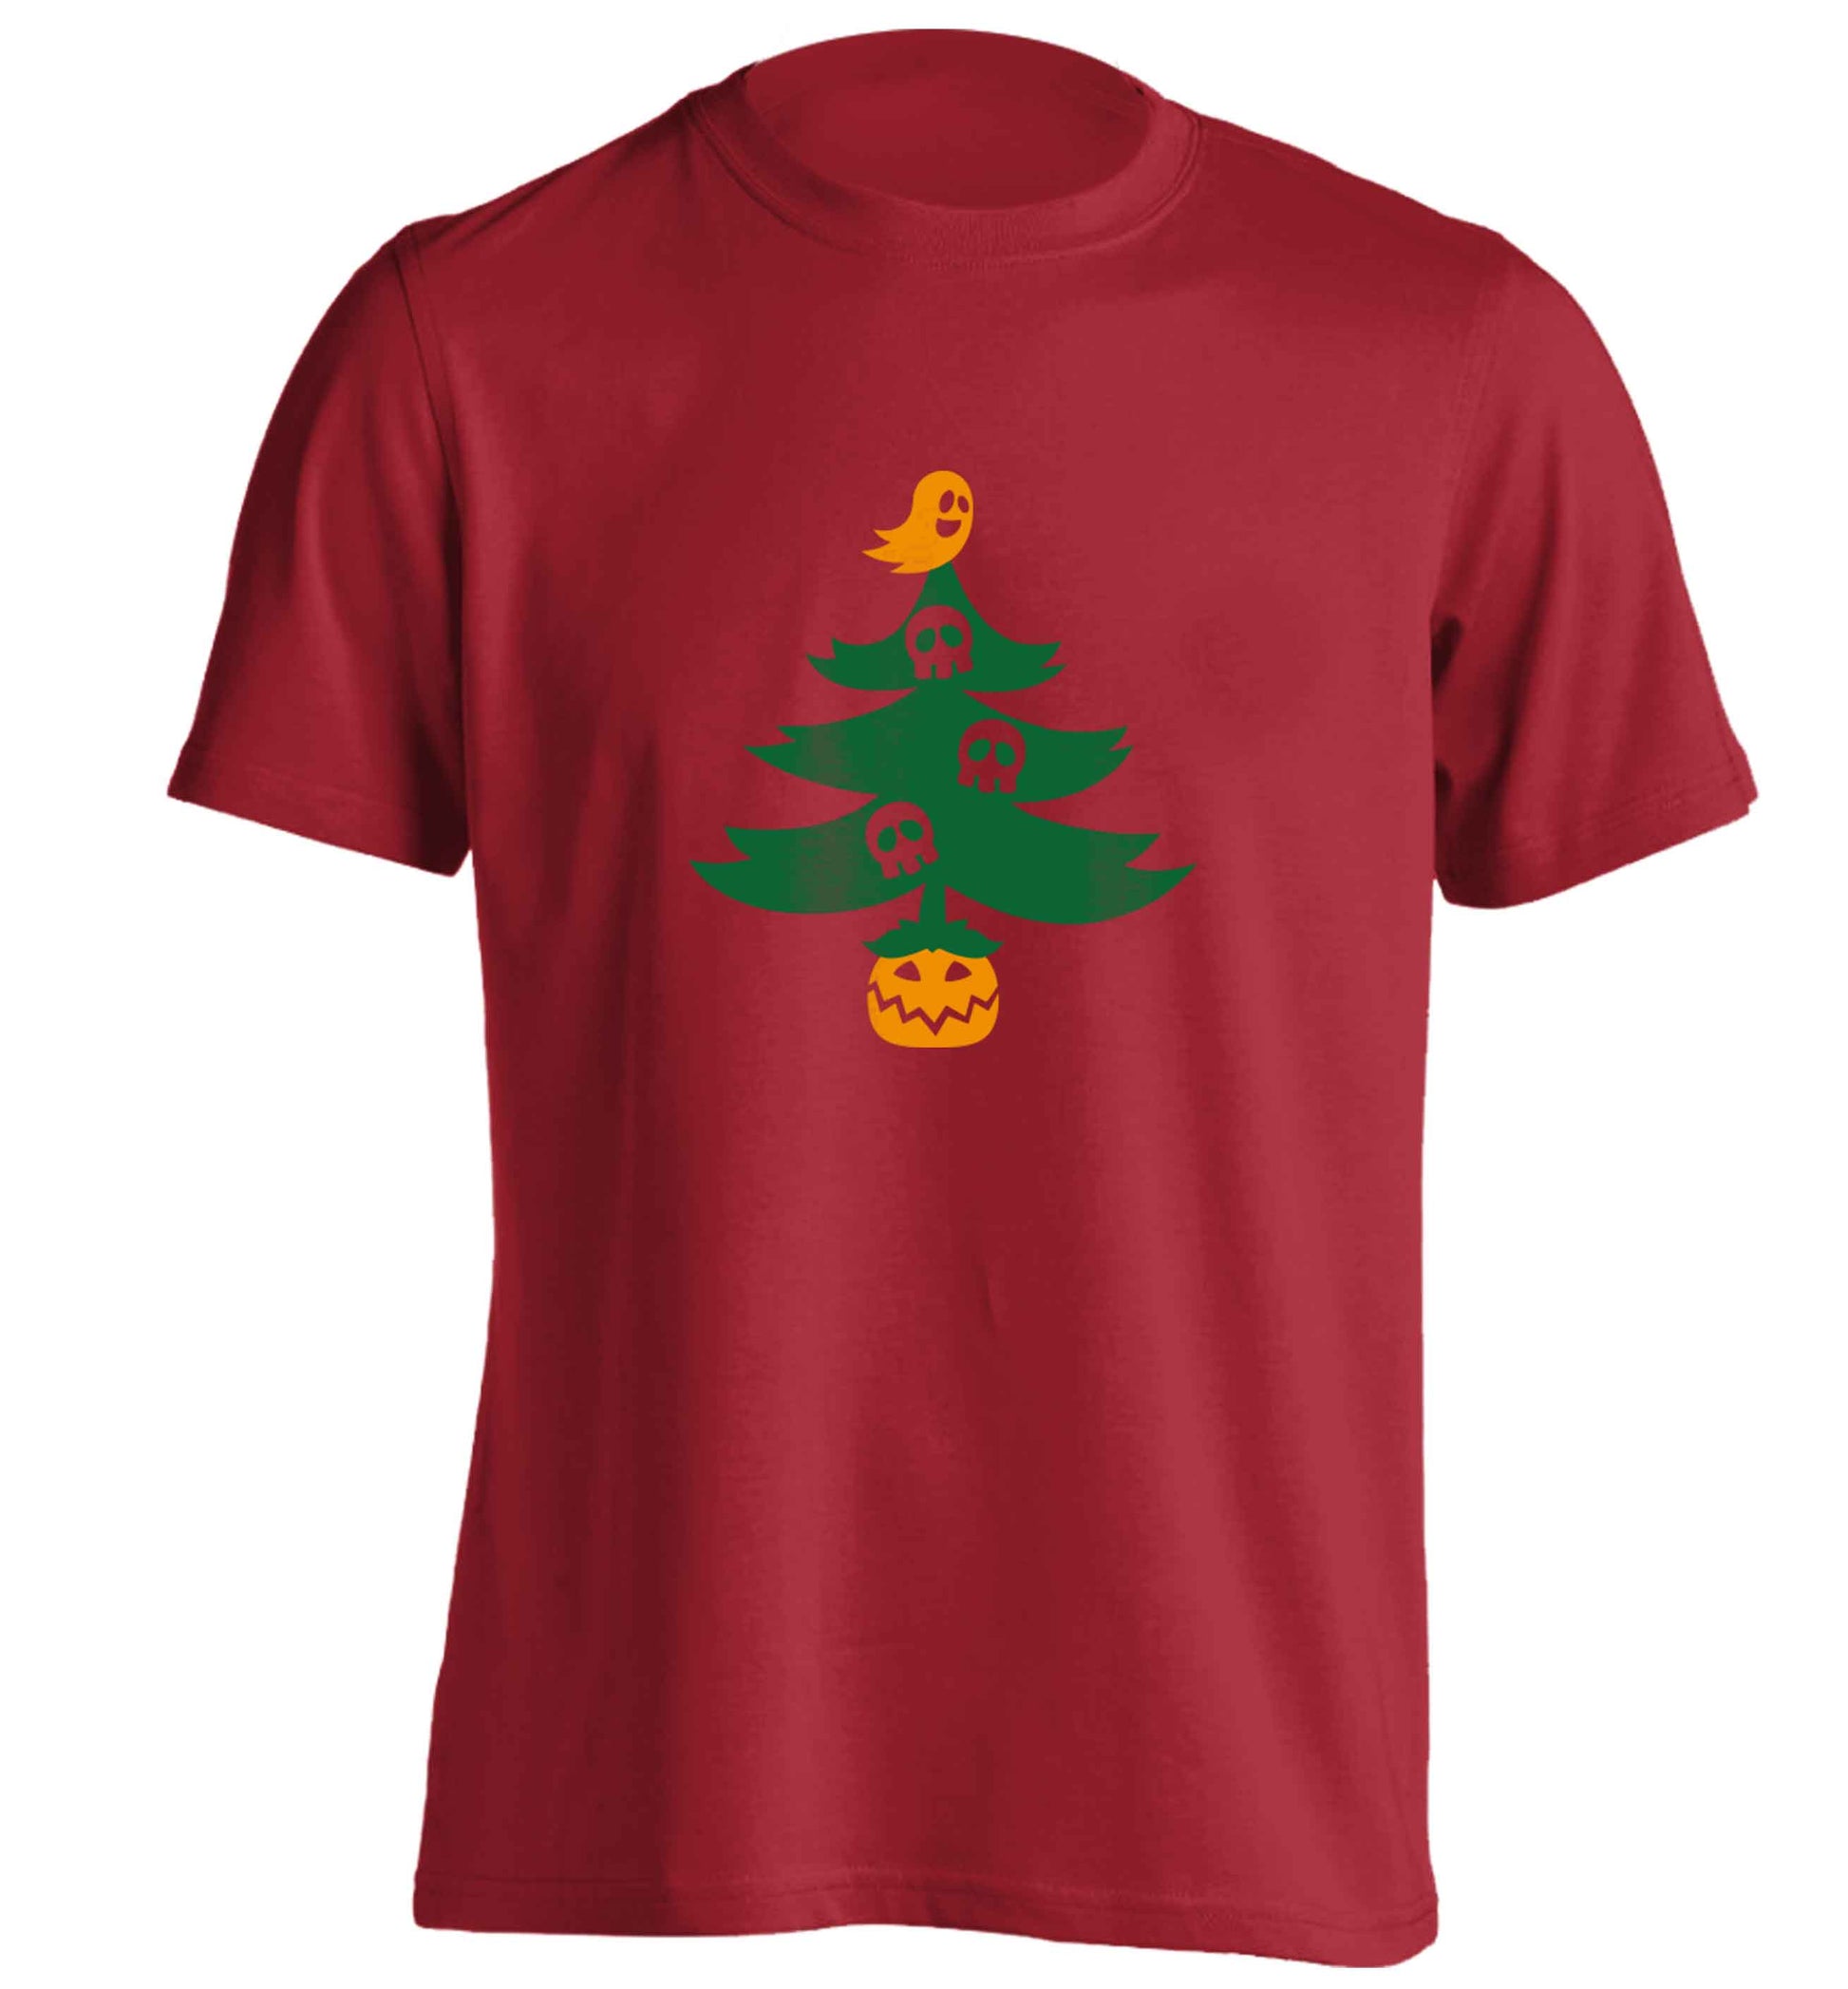 Halloween Christmas tree adults unisex red Tshirt 2XL